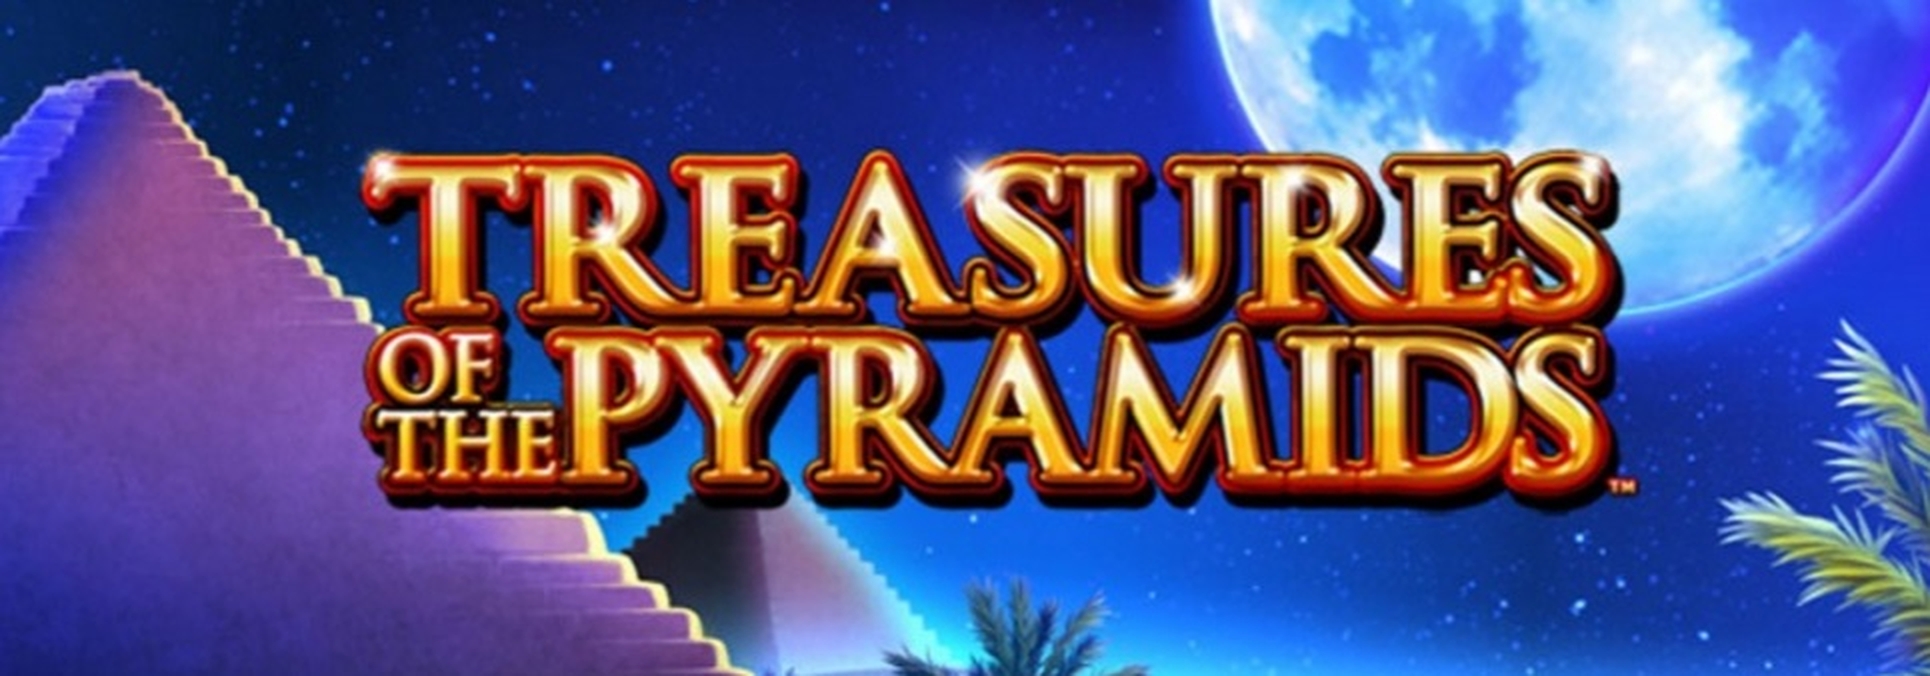 Treasures of the Pyramids demo